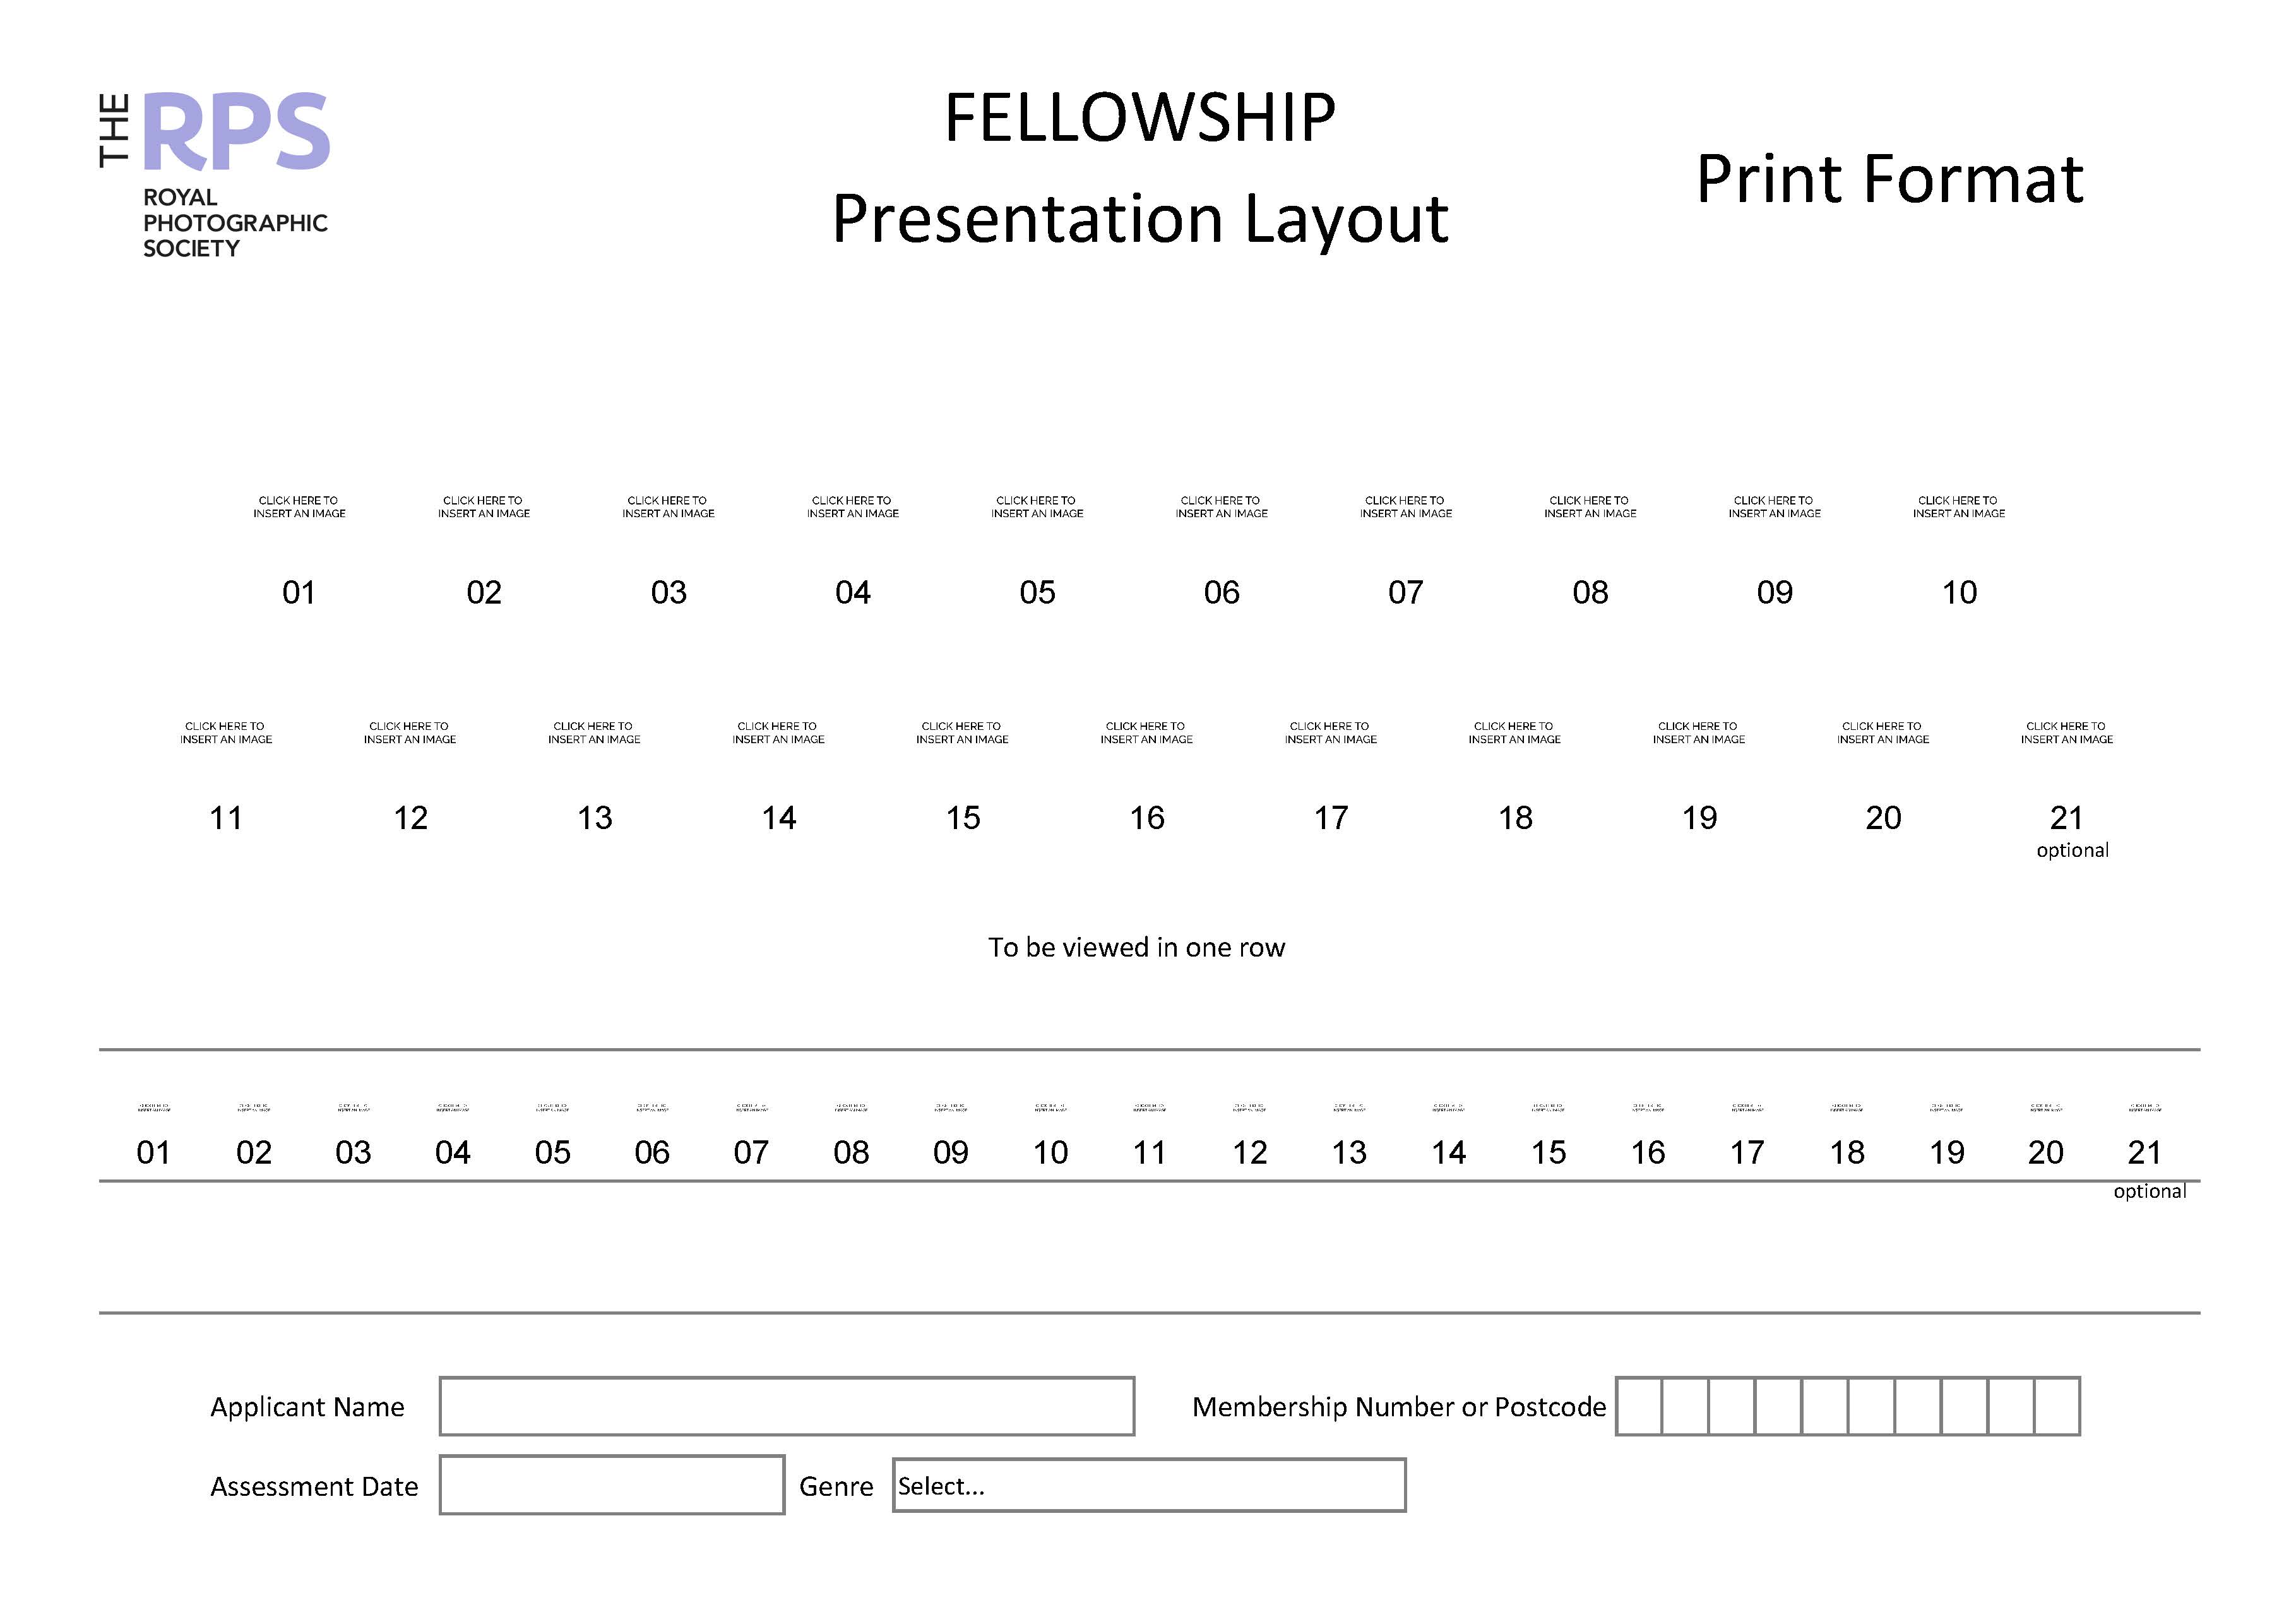 FRPS 2021 Presentation Layout 20 21 Single Row PRINT